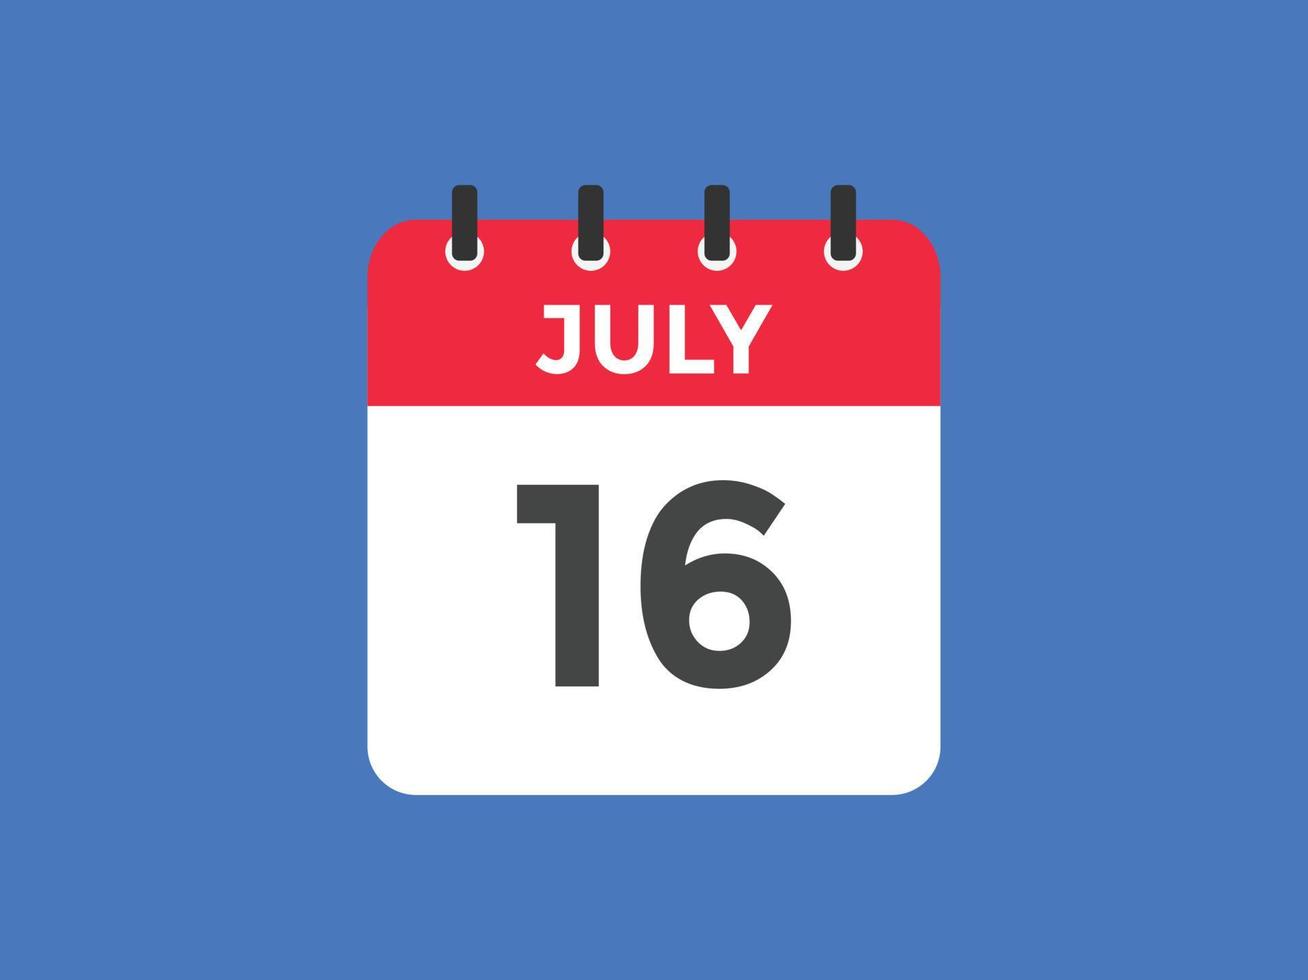 juli 16 kalender påminnelse. 16: e juli dagligen kalender ikon mall. kalender 16: e juli ikon design mall. vektor illustration